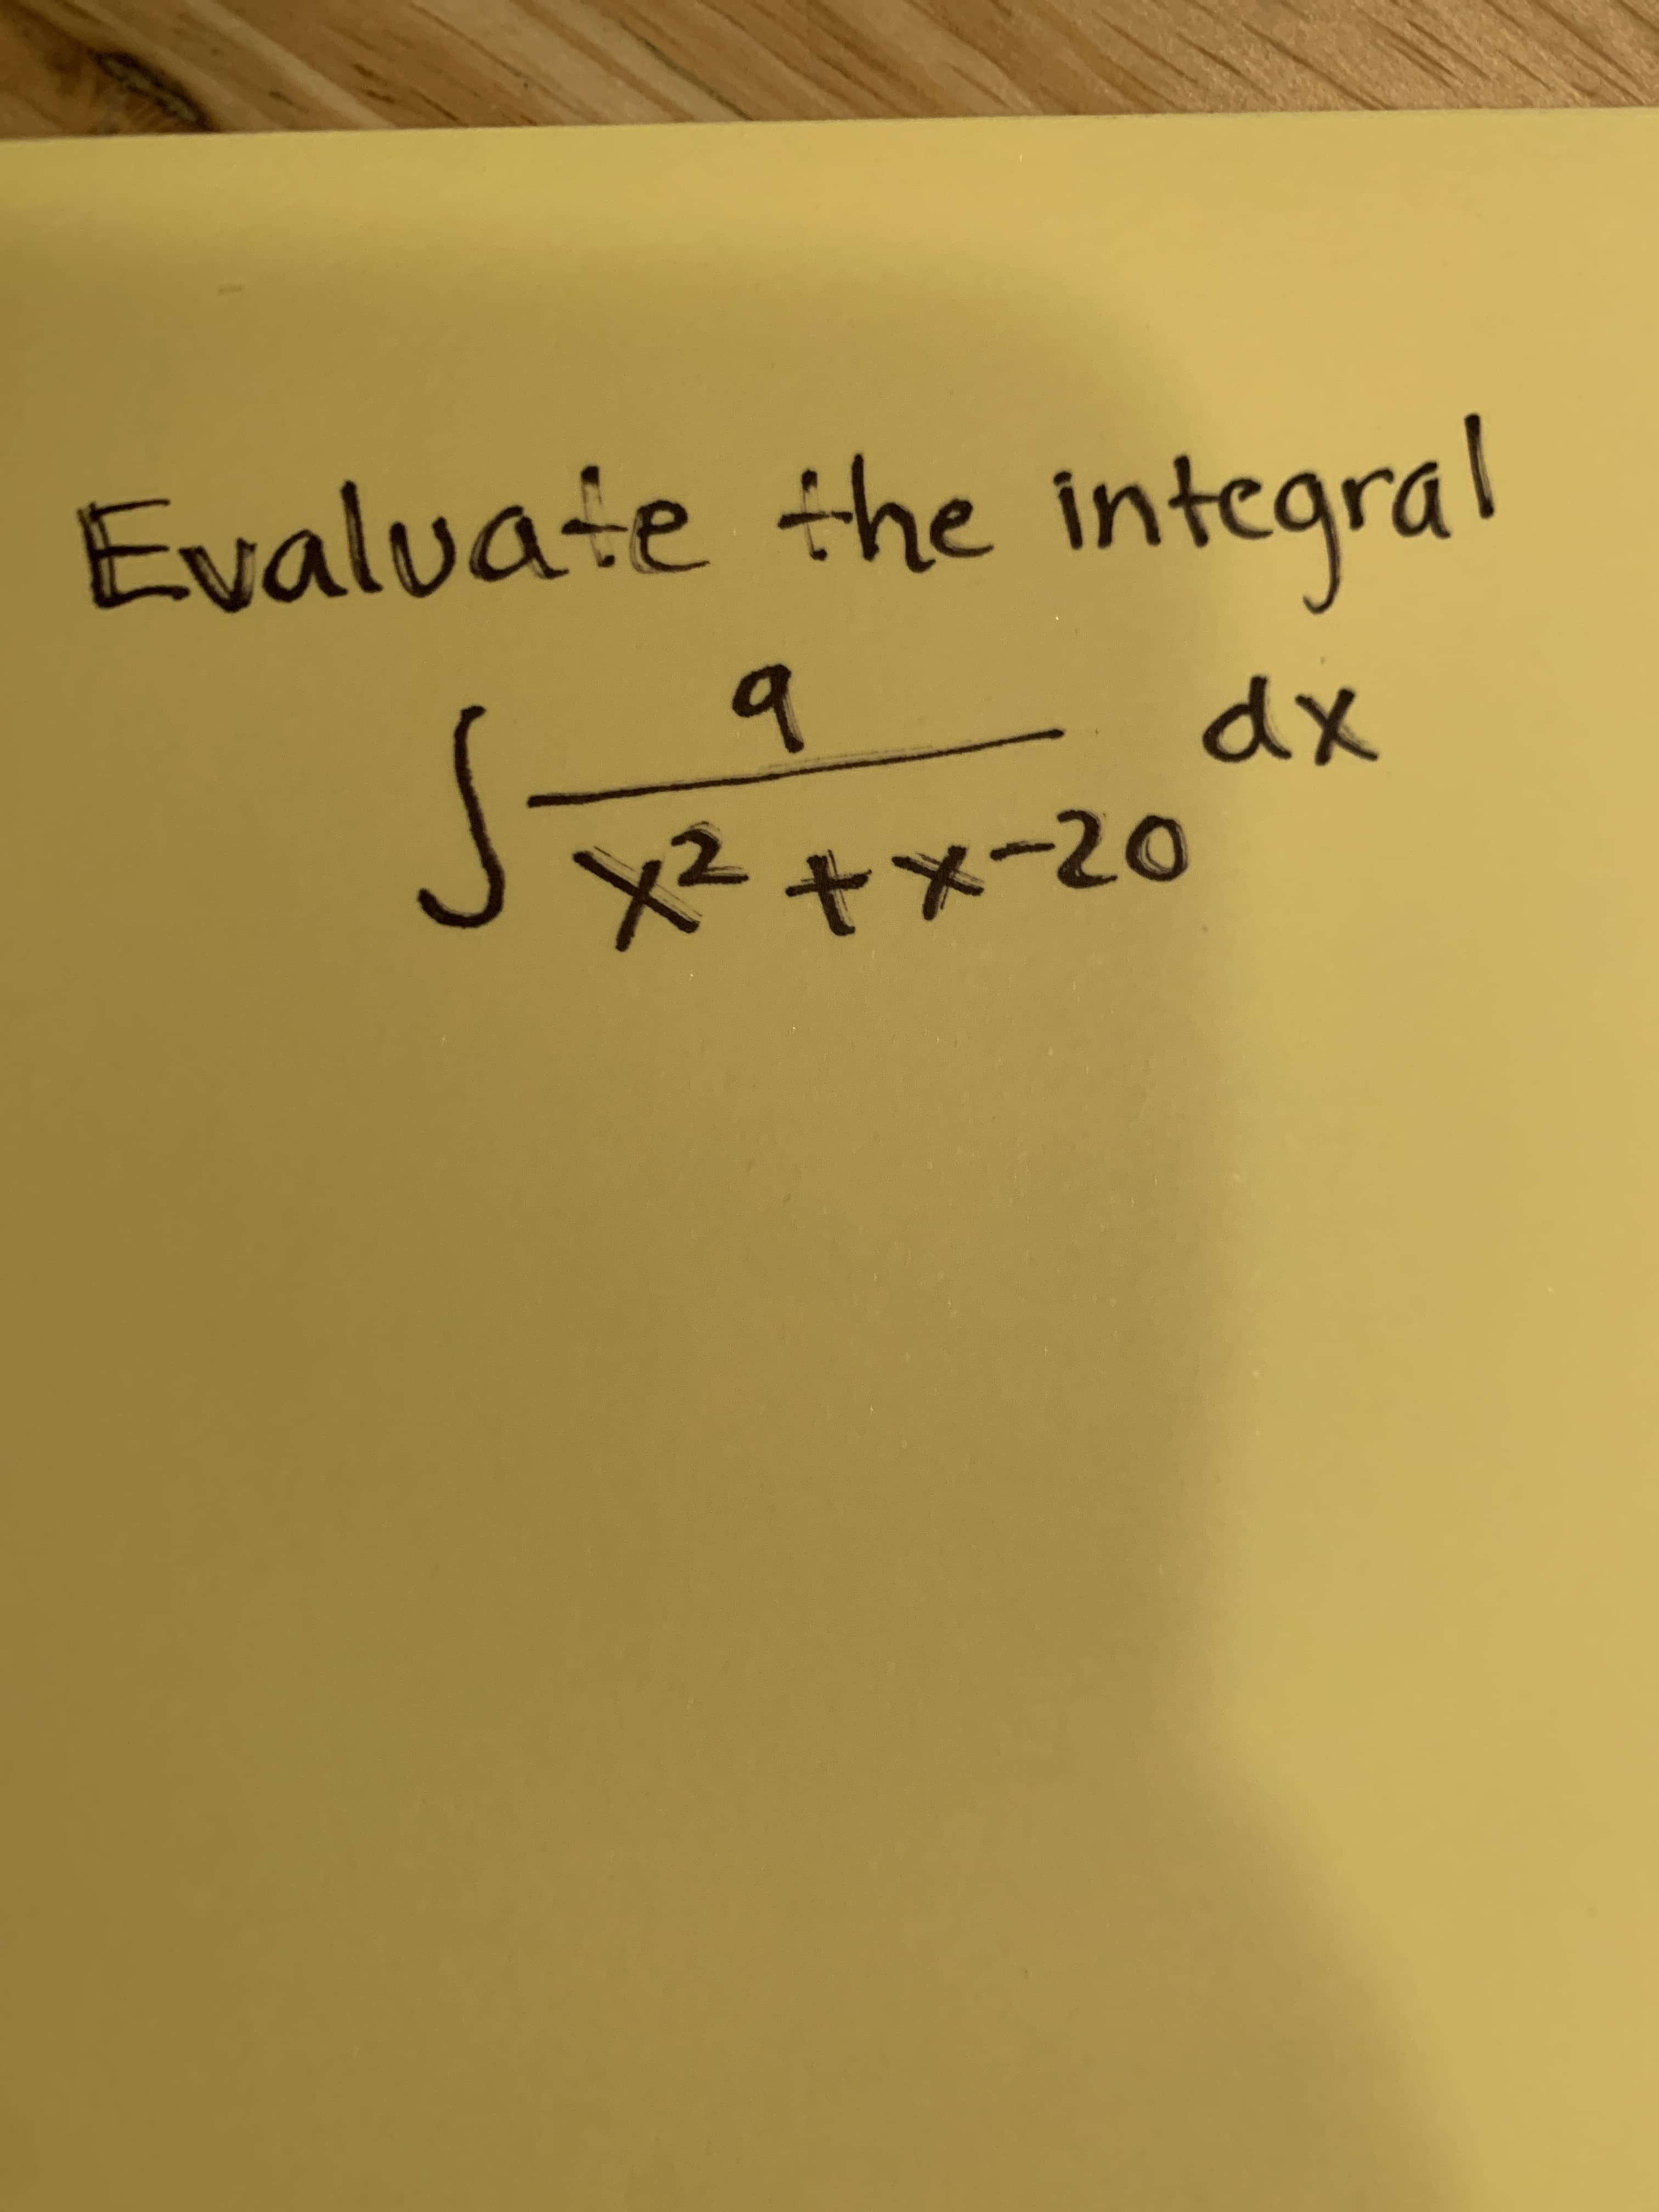 Eyaluaie the integral
9
dx
Jx²+x-20
終tメー
メp
